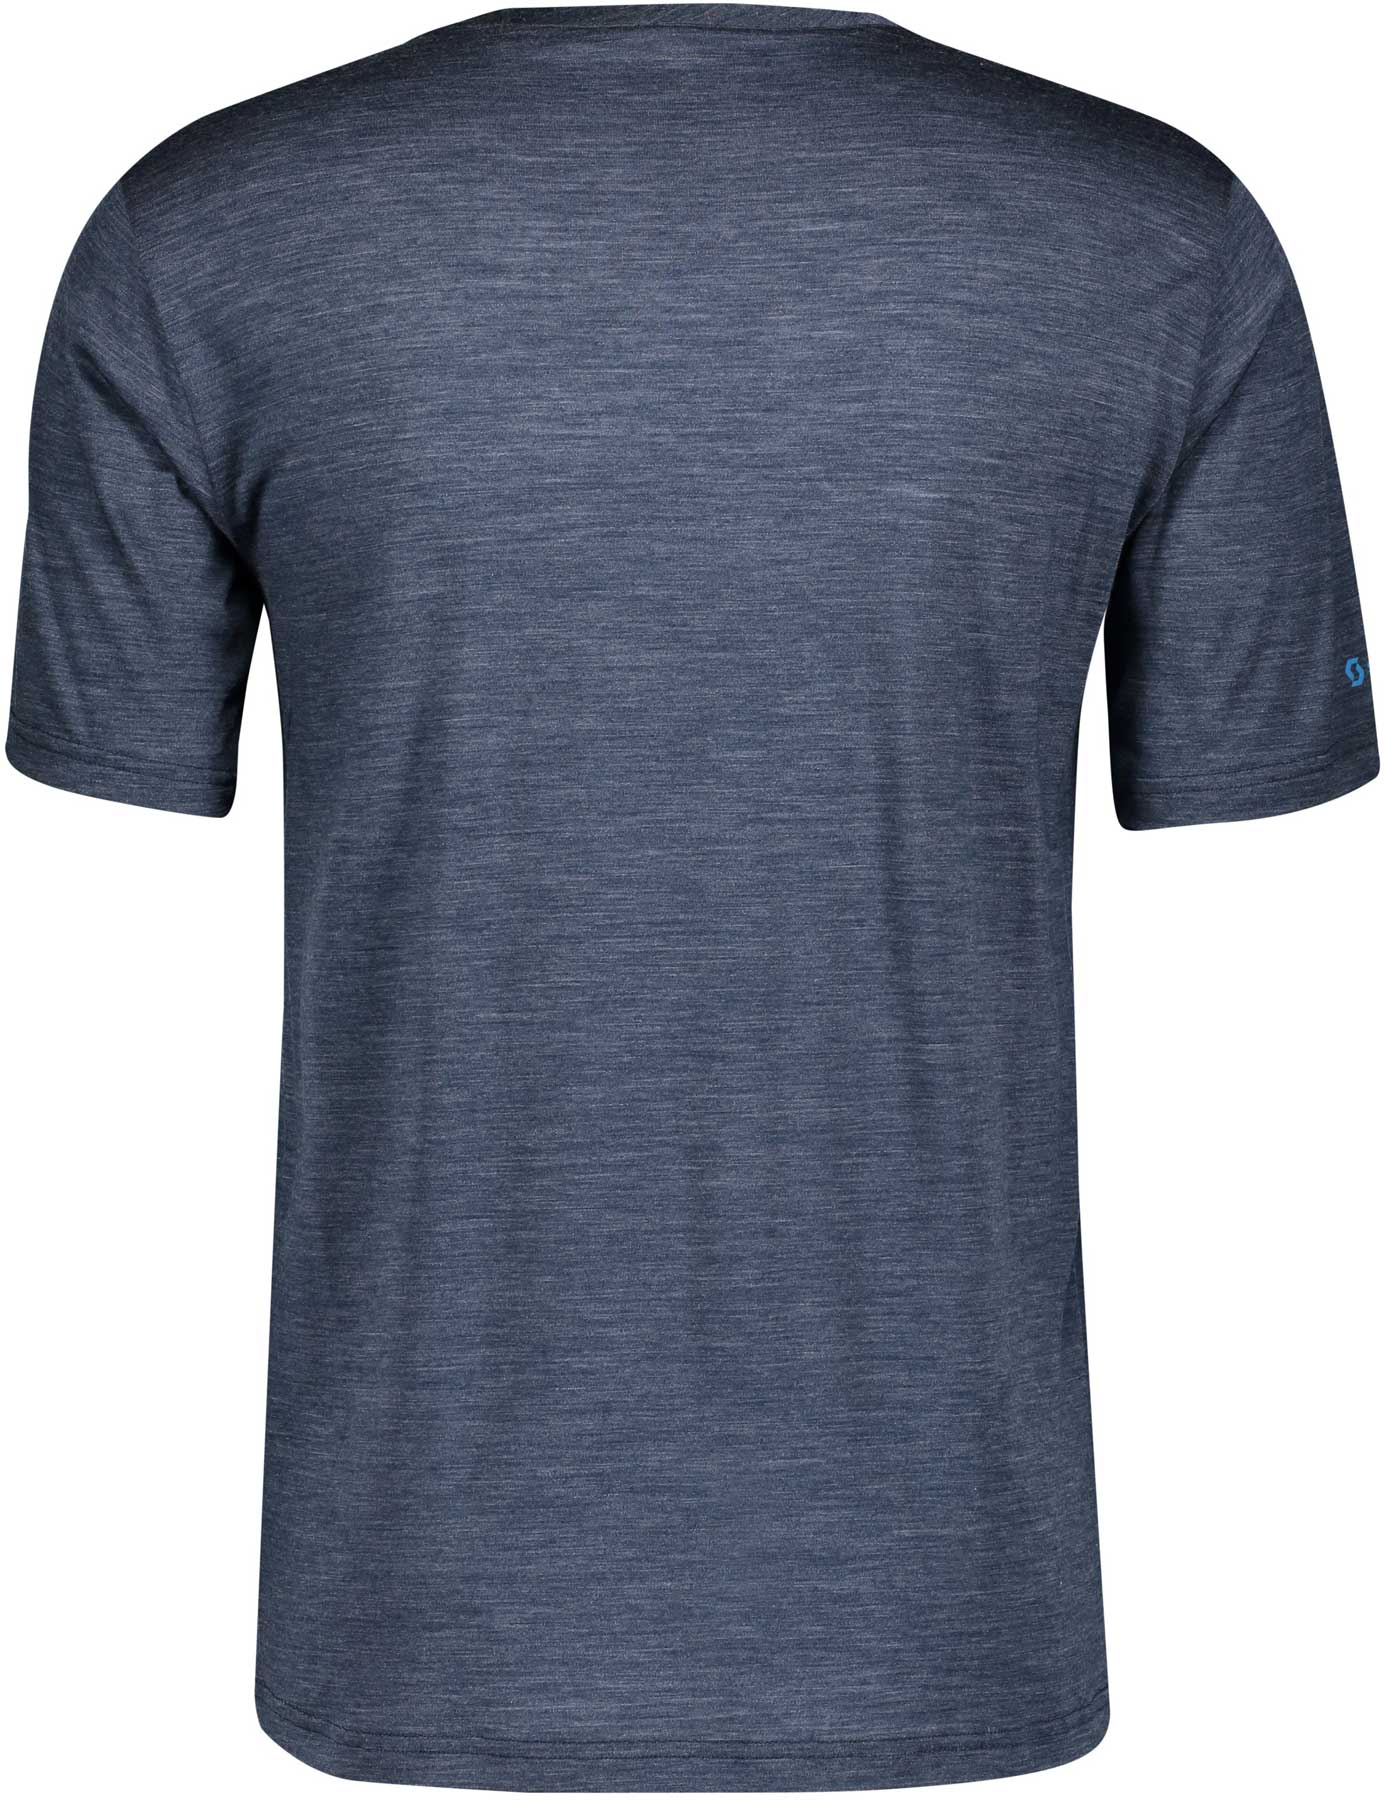 Men's T-Shirt